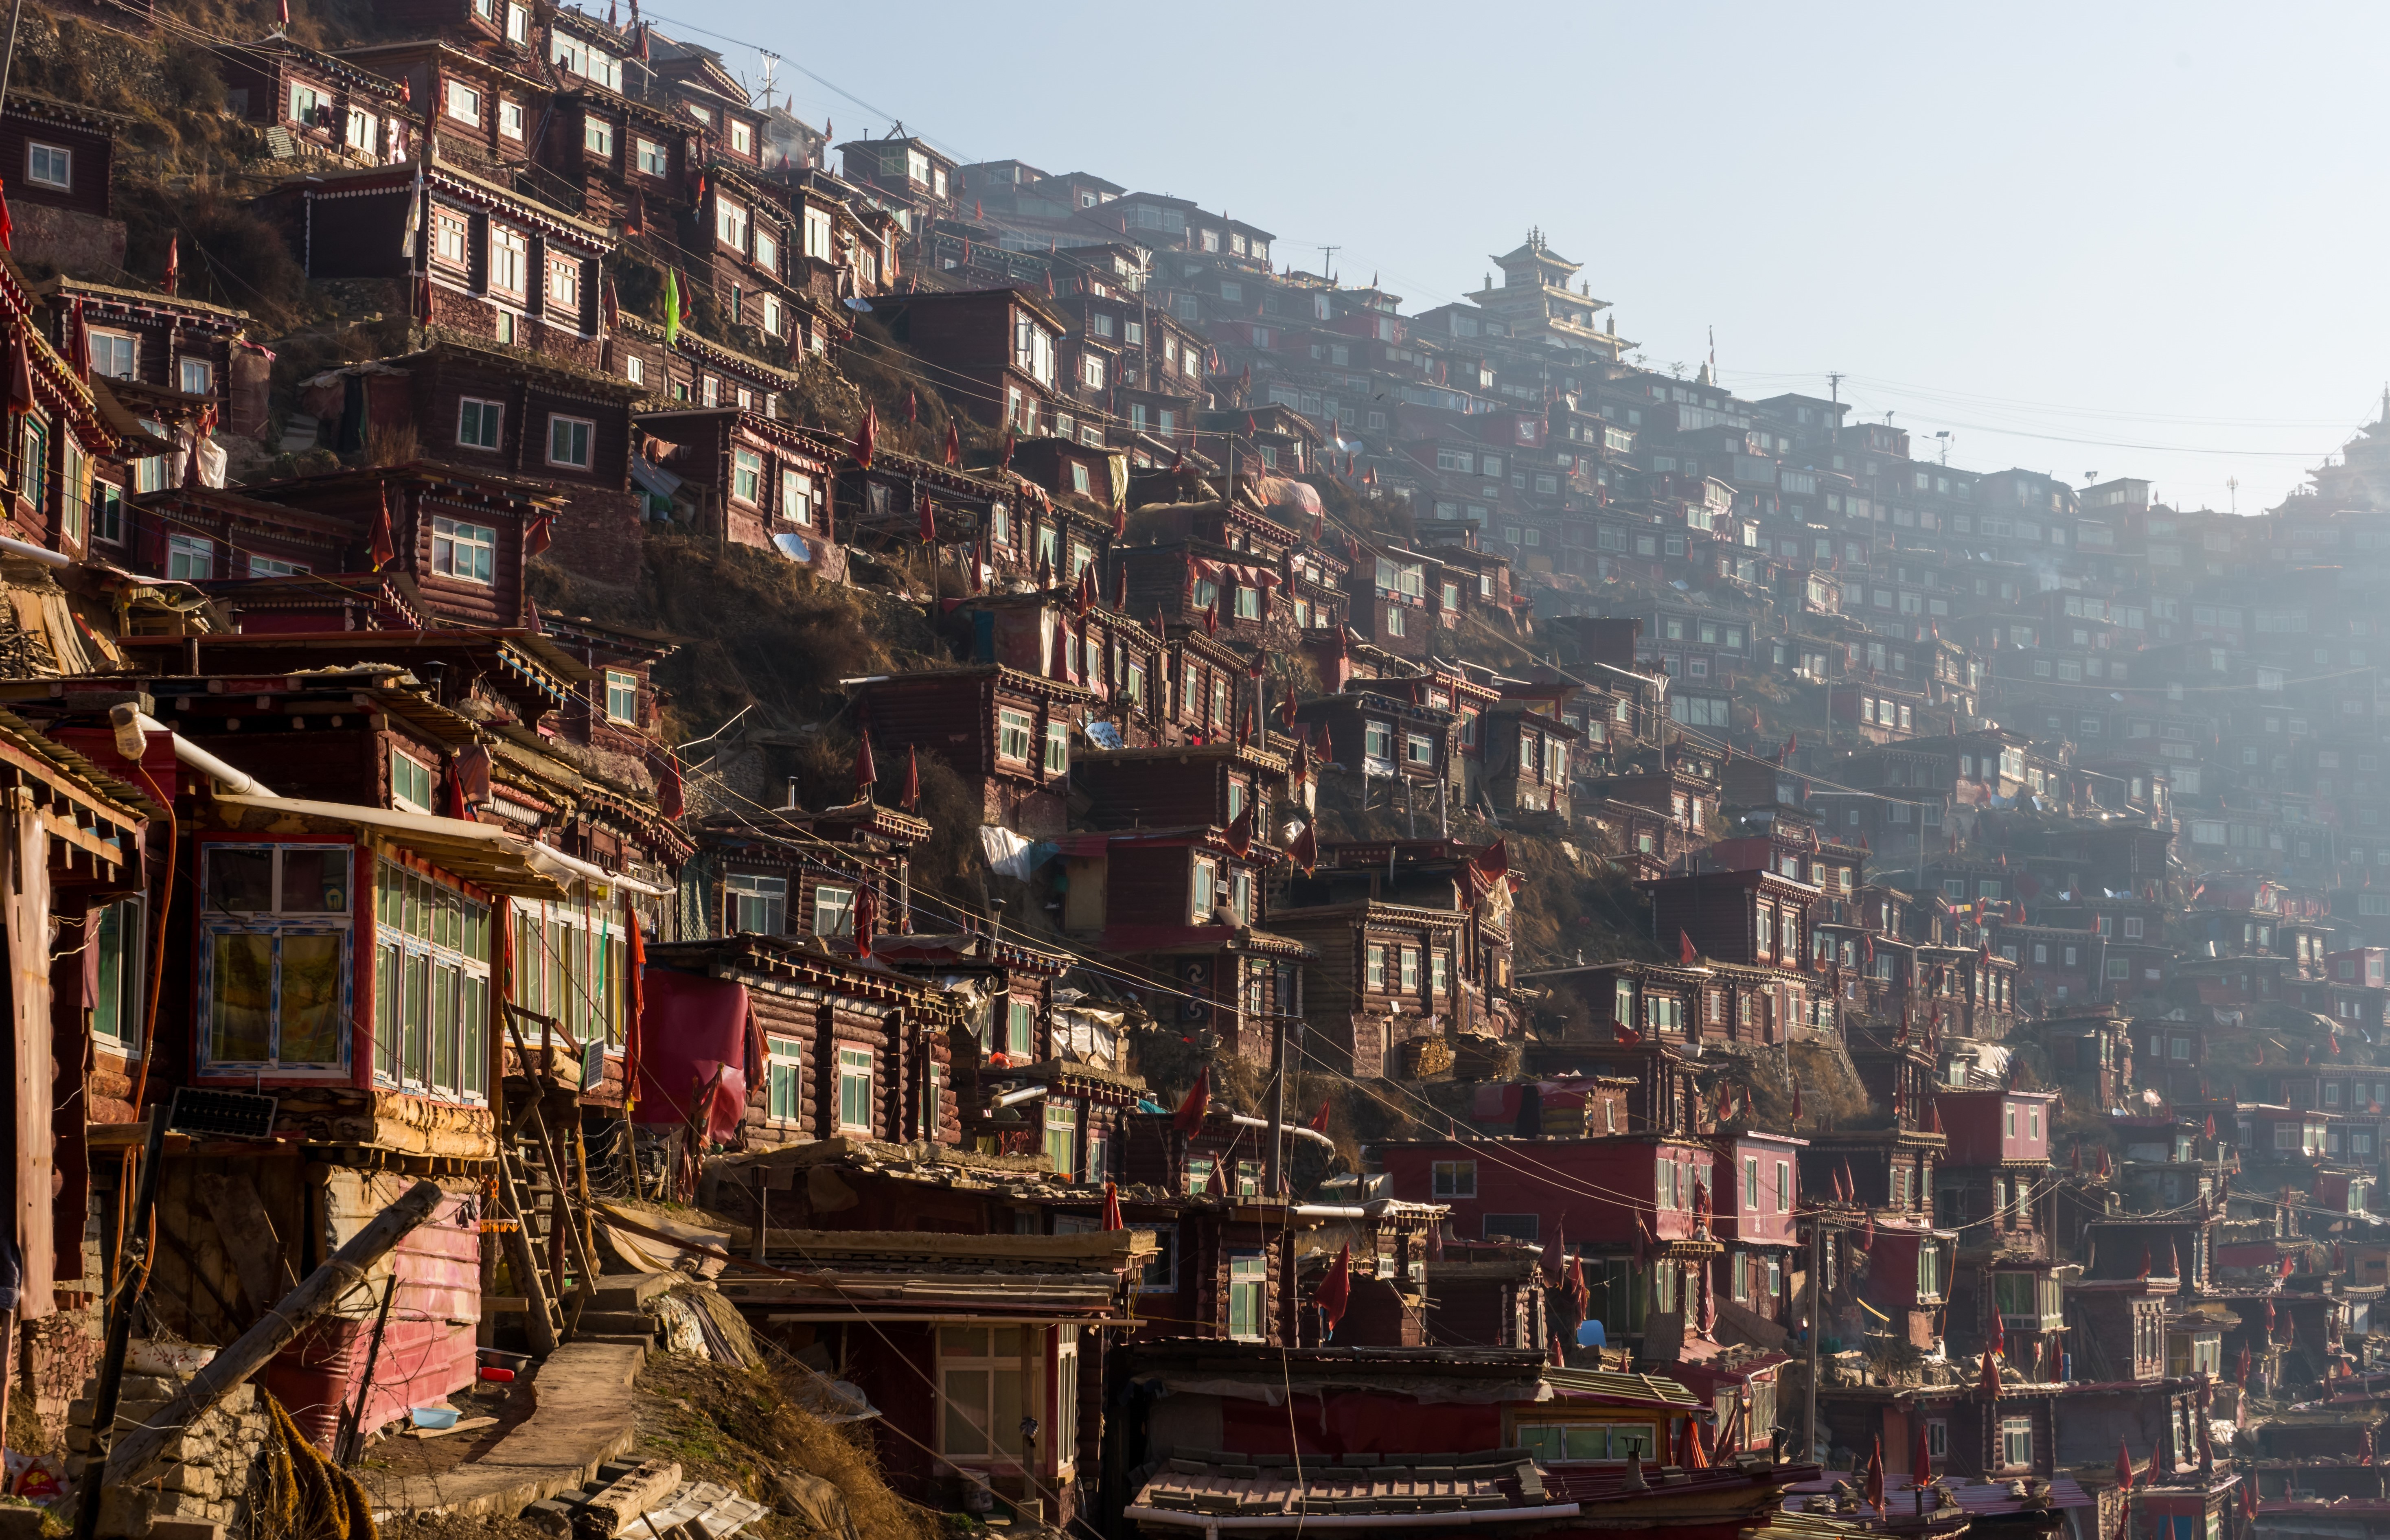 http://tibetpedia.com/wp-content/uploads/2016/05/Seda-City-Tibet-Small-1.jpg